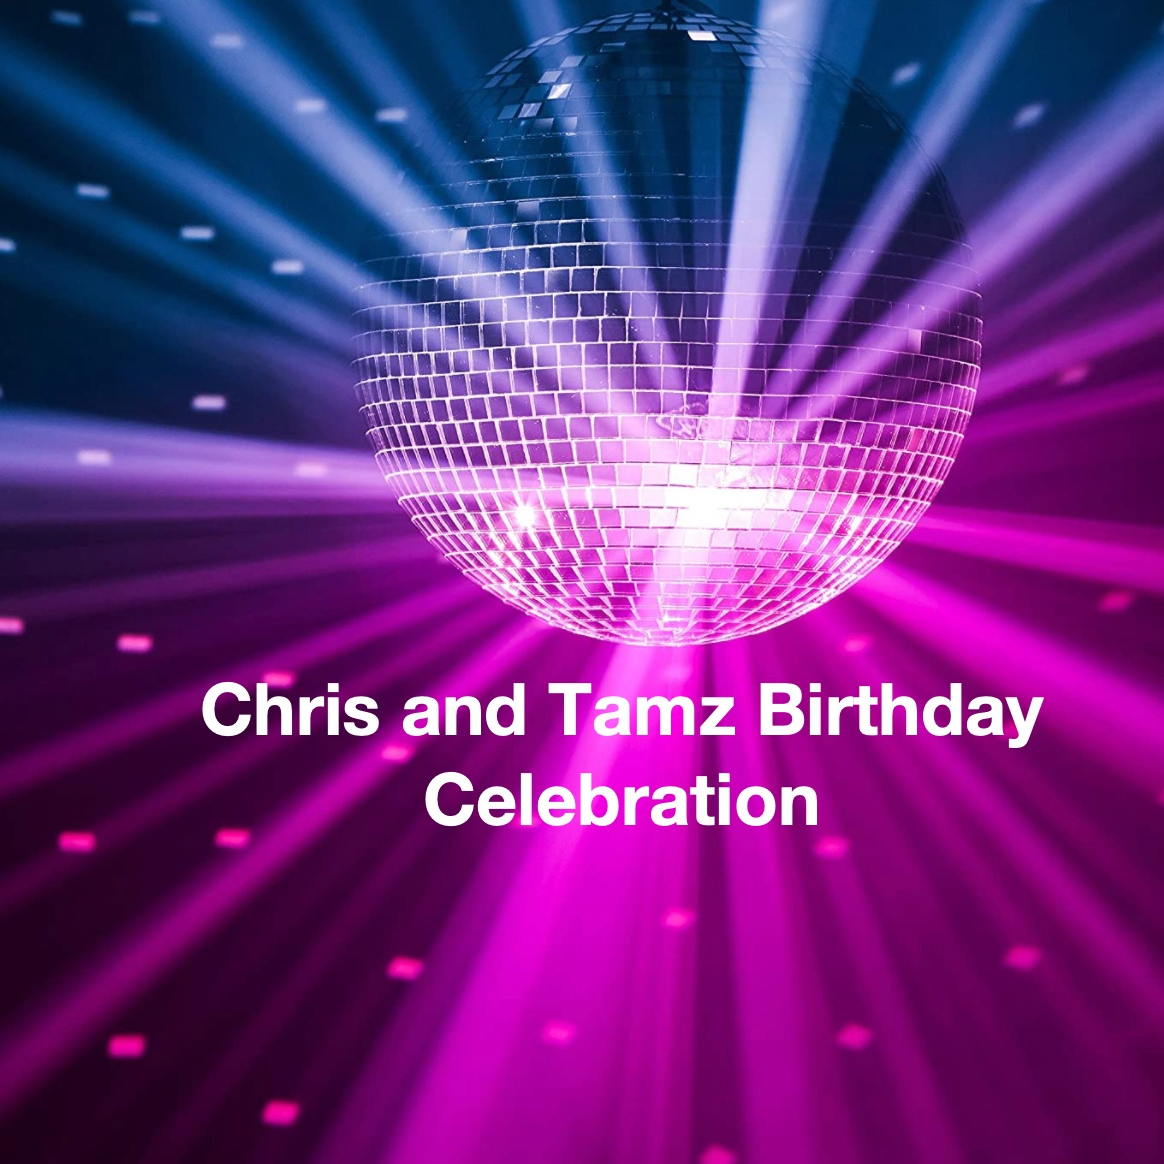 Chris and Tamz Birthday Celebration